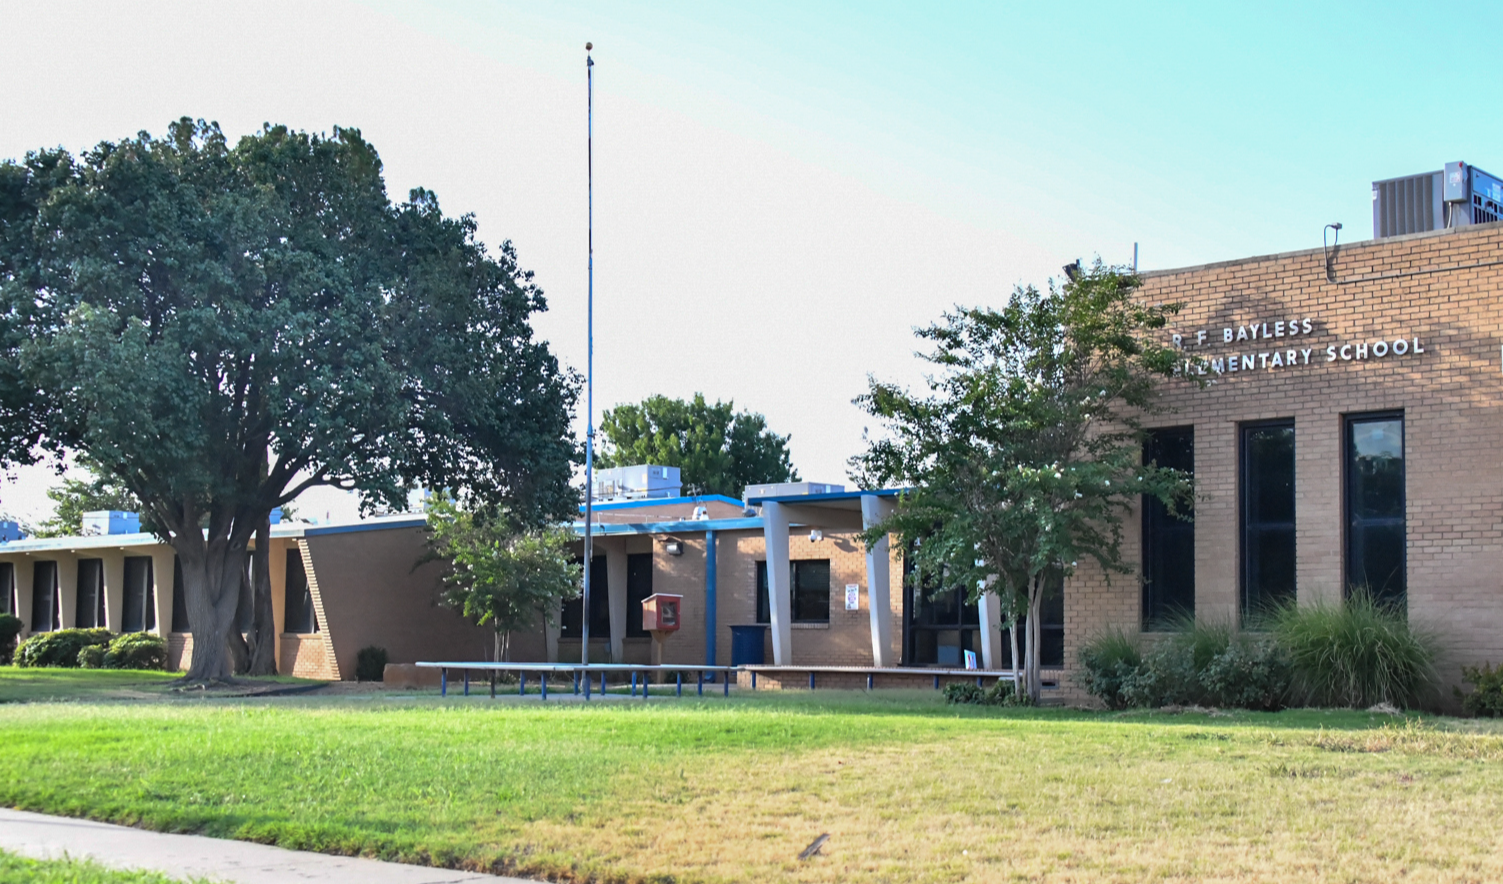 Bayless Elementary School